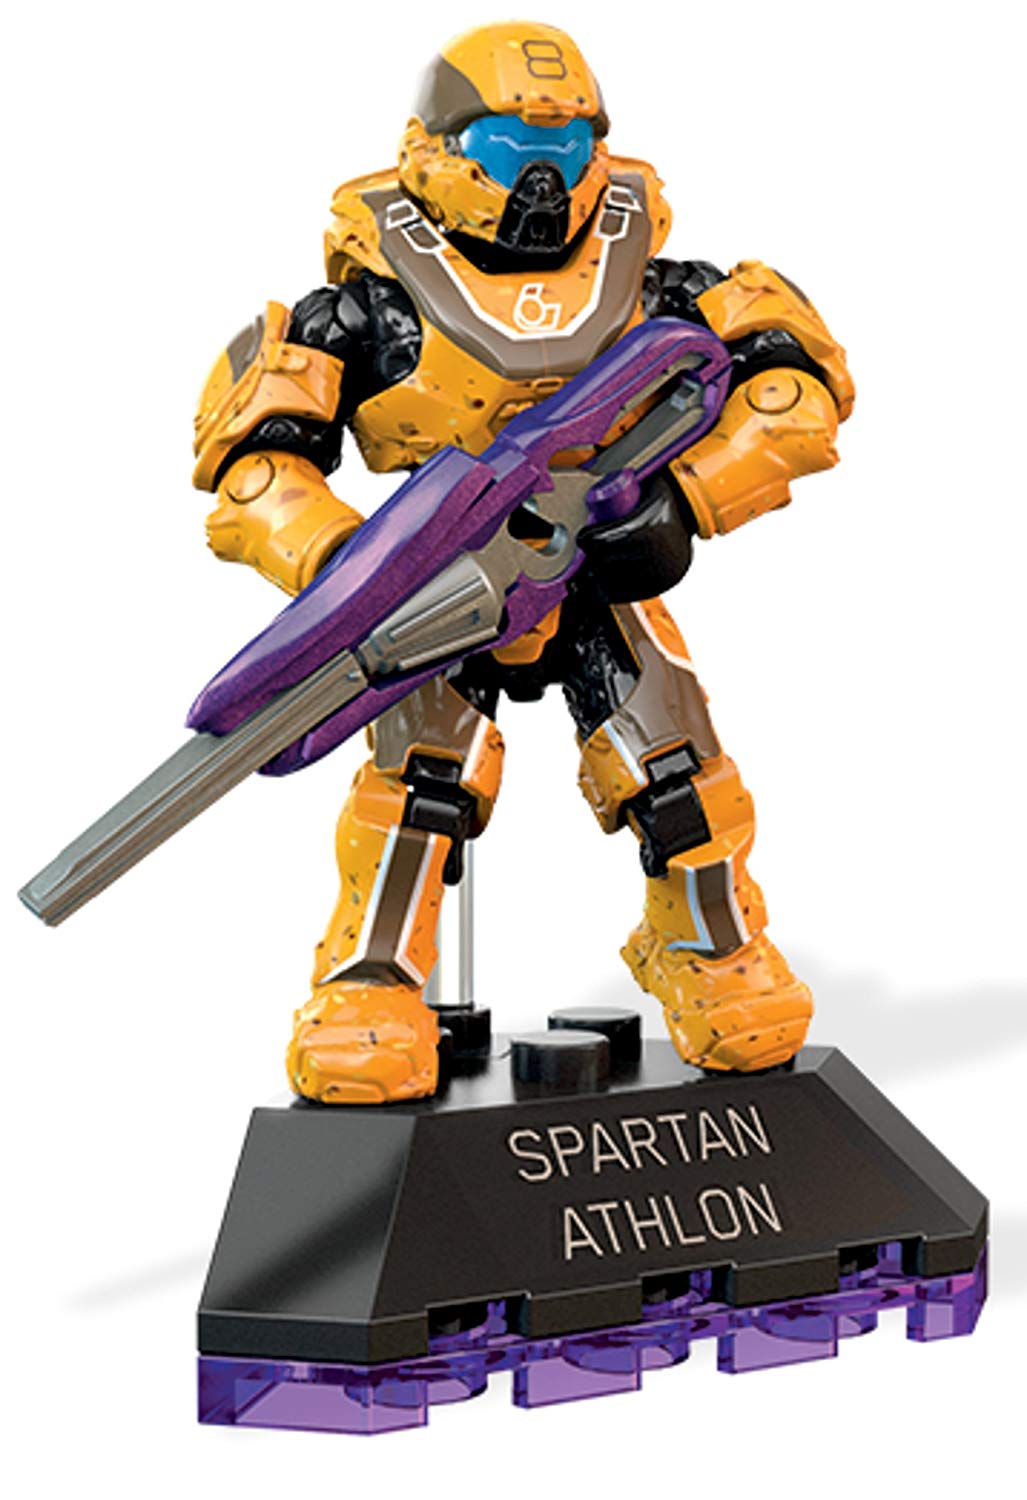 Mega Construx Halo Spartan Athlon Building Set